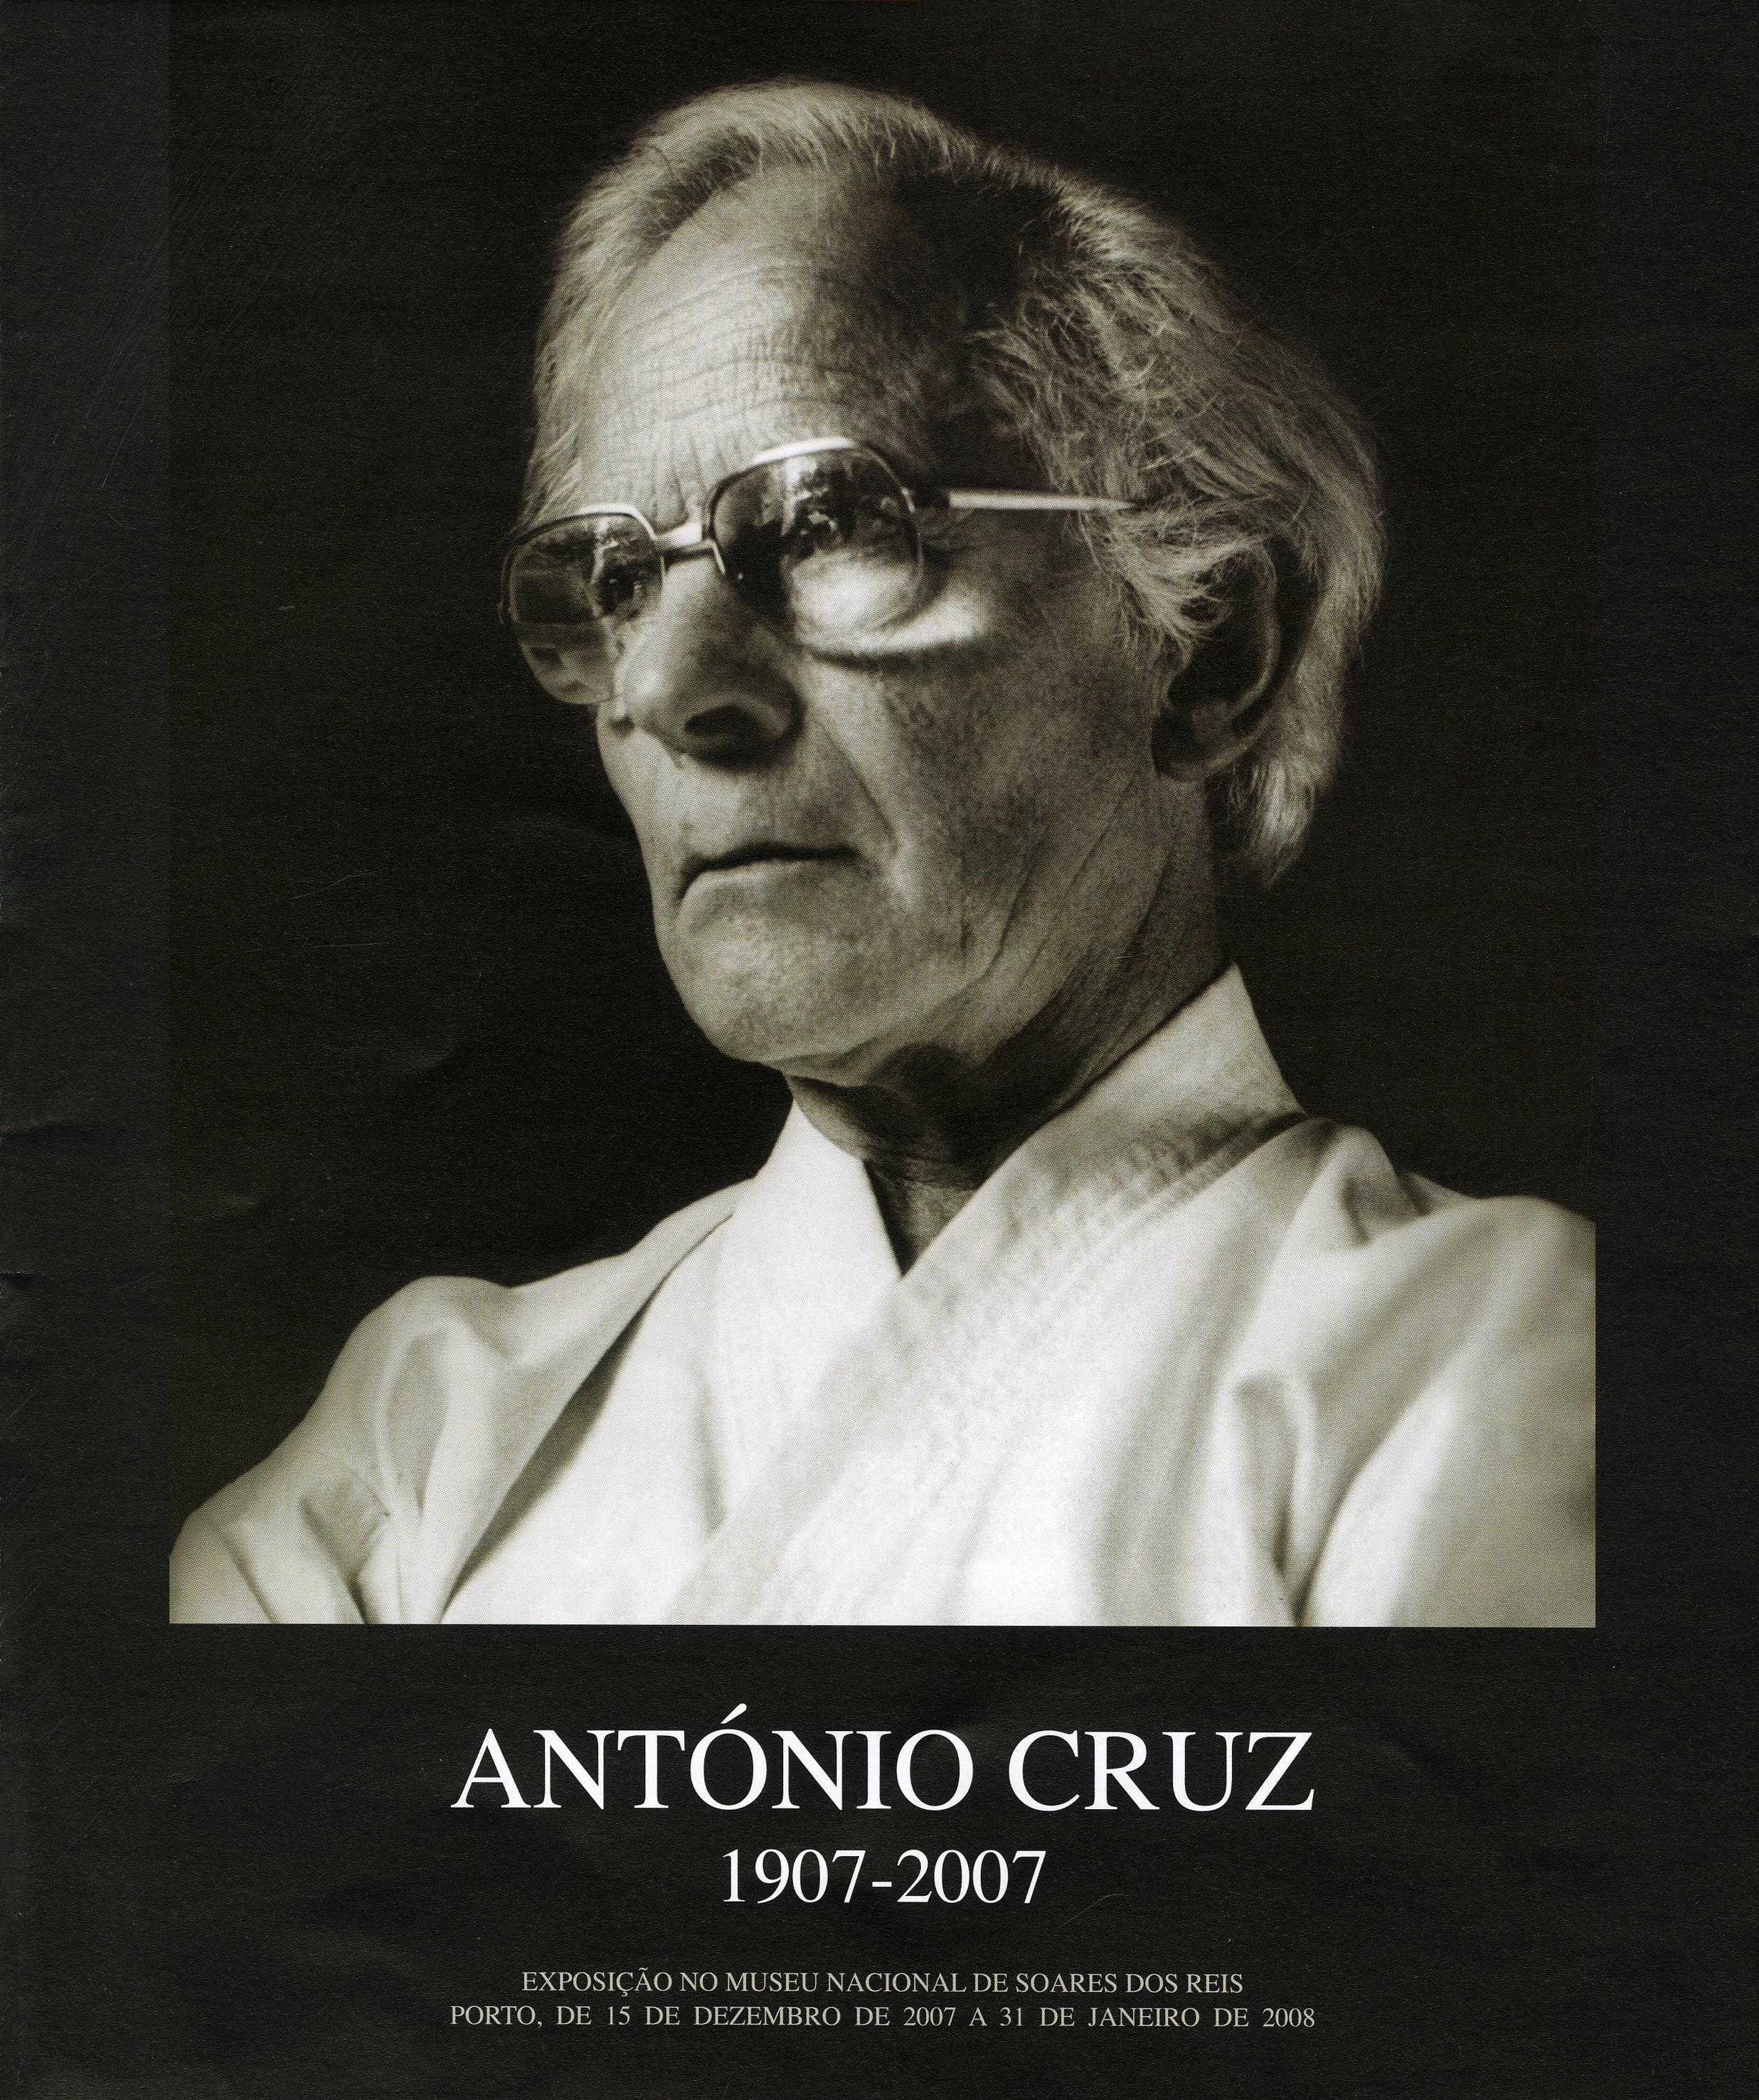 António Cruz, 1907-2007